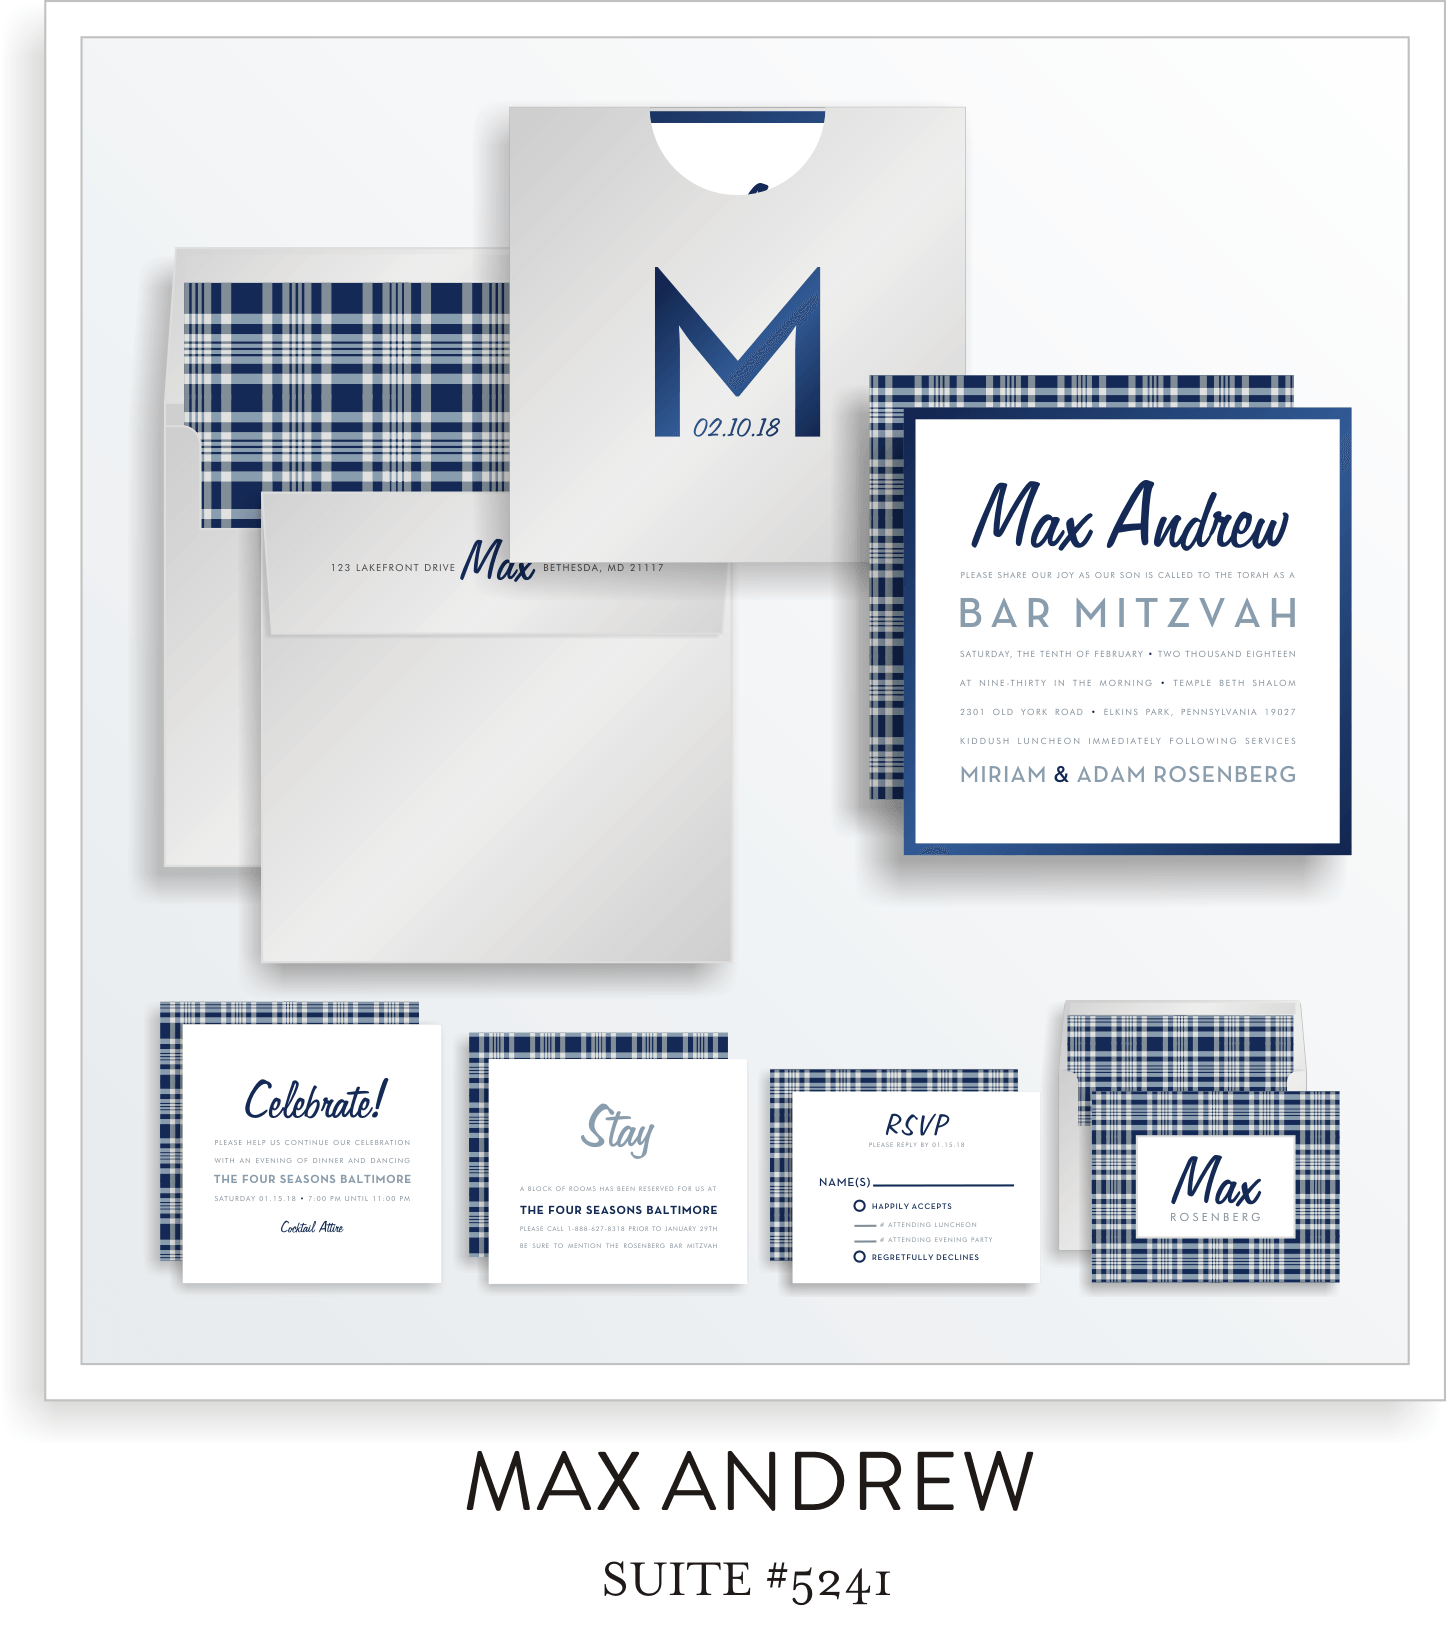 Copy of Copy of Bar Mitzvah Invitation Suite 5241 - Max Andrew